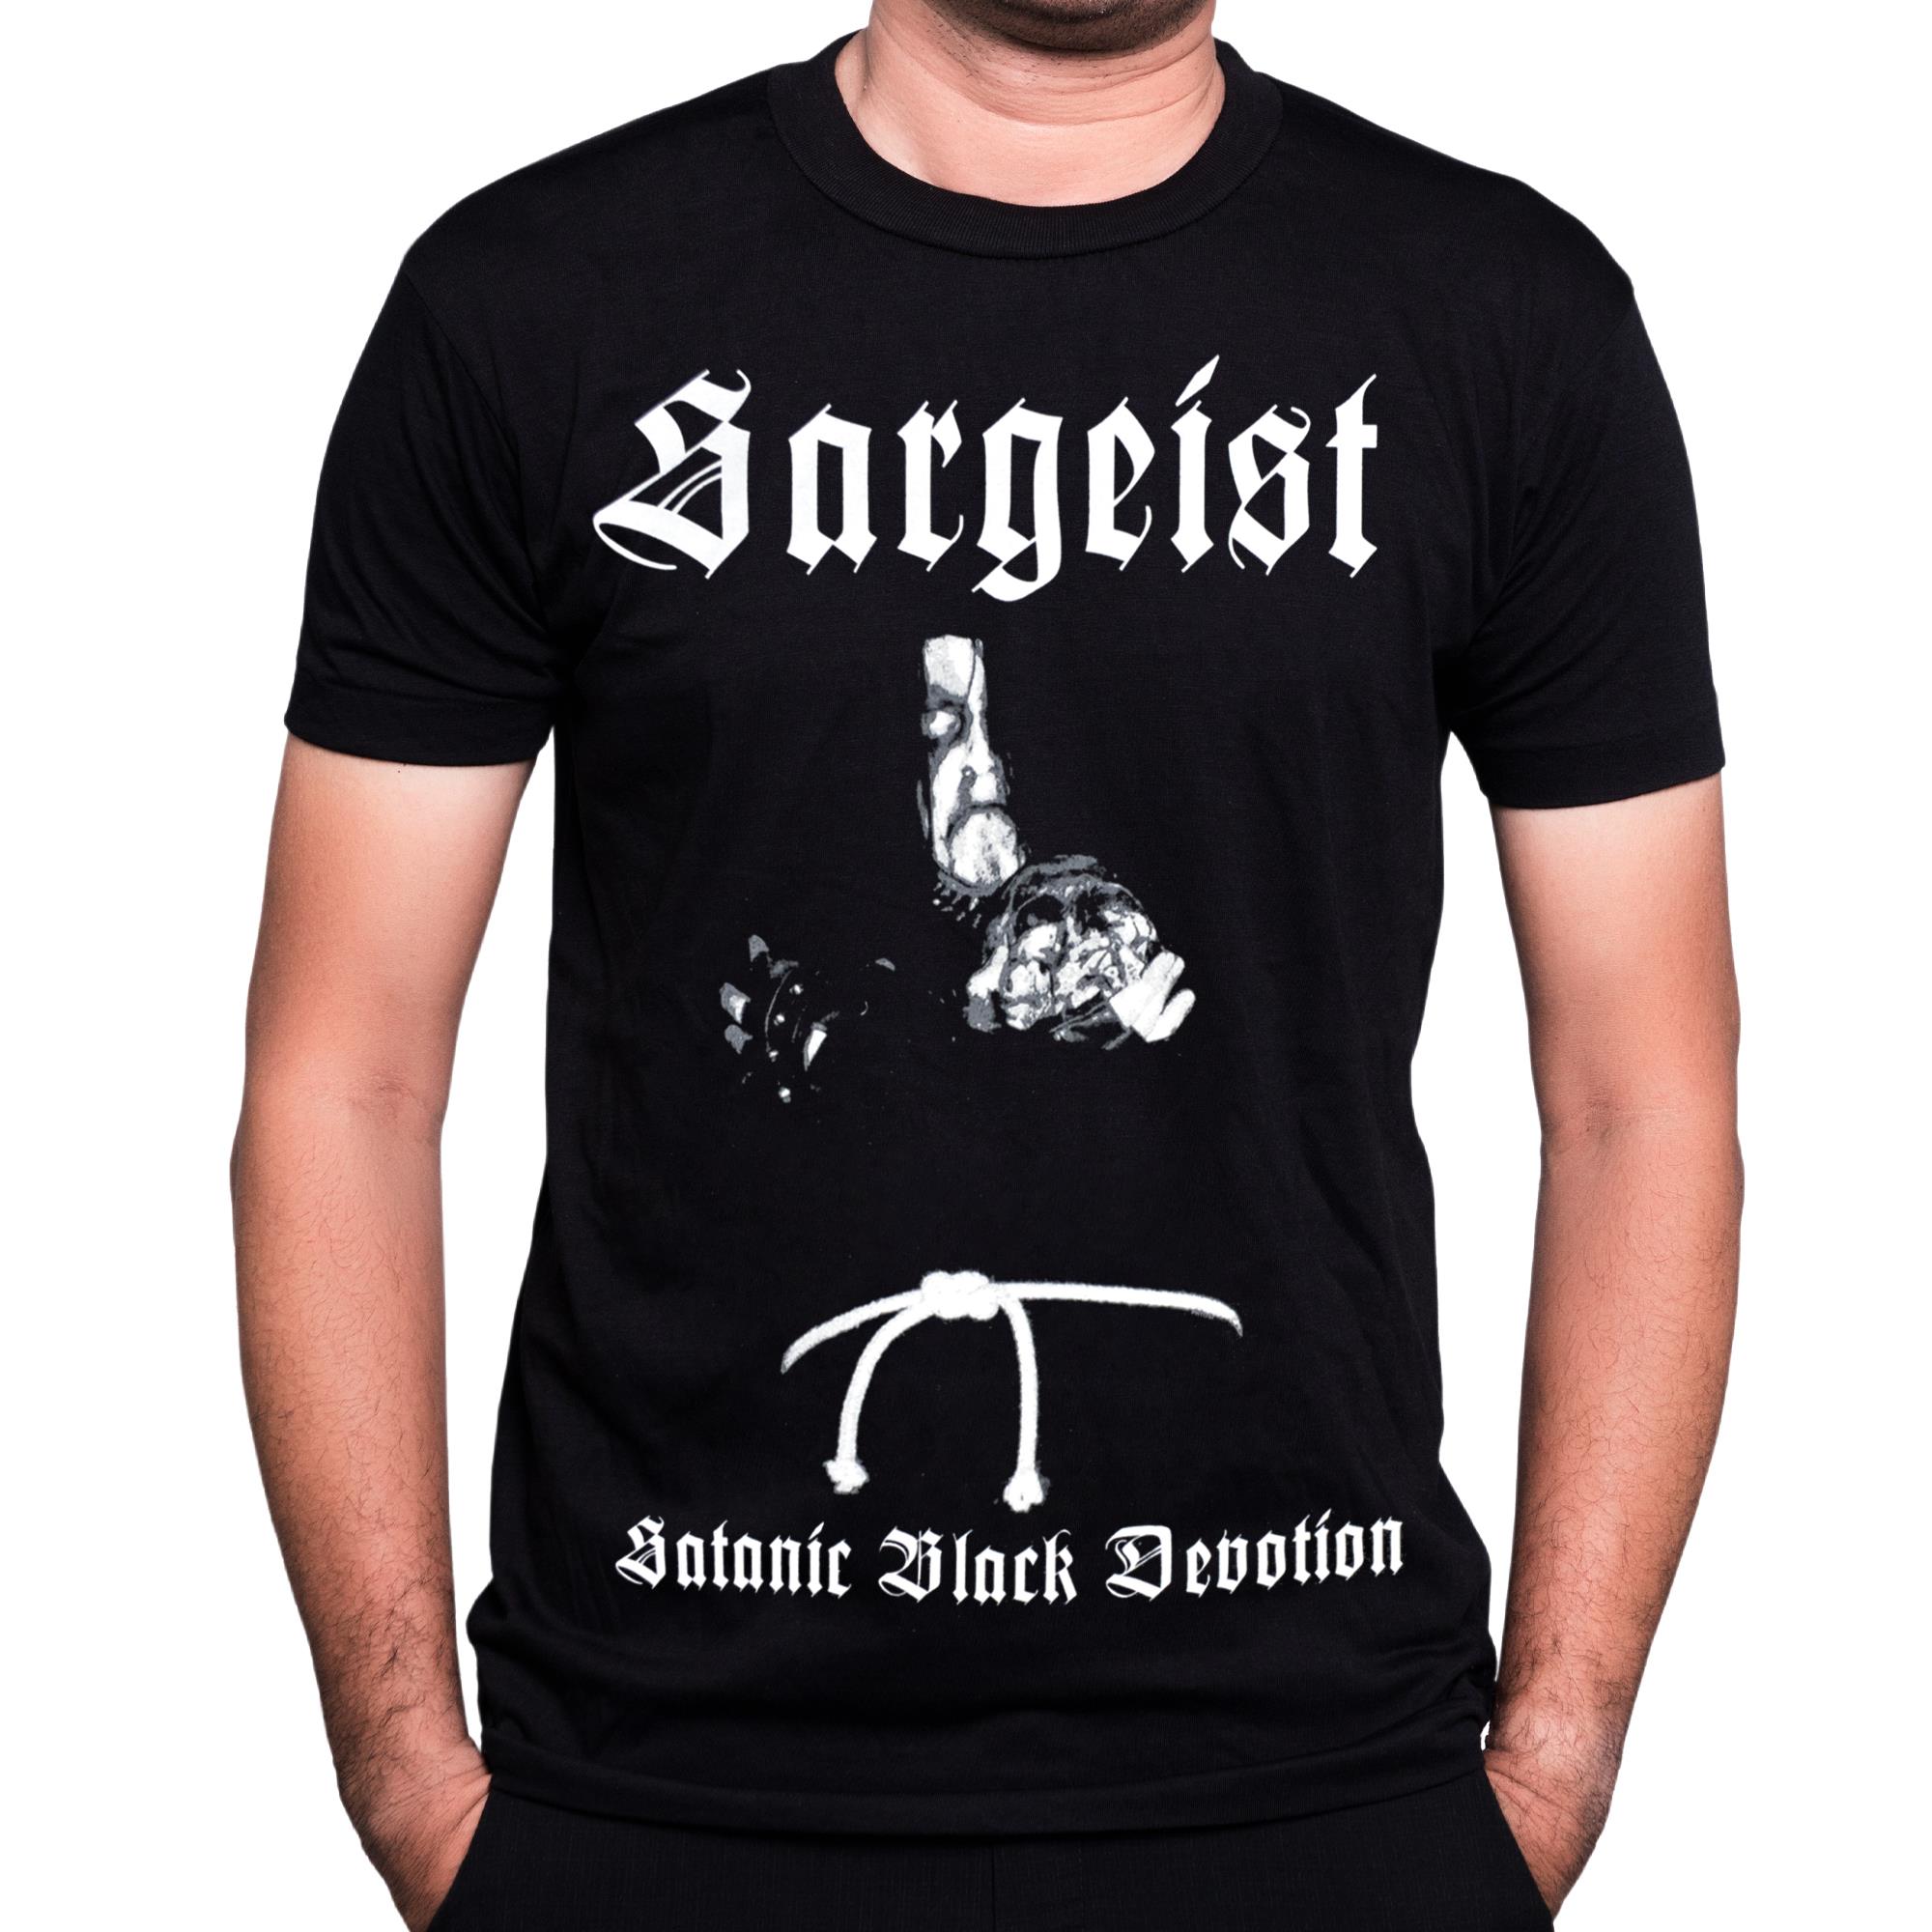 Satanic Black Devotion T-Shirt